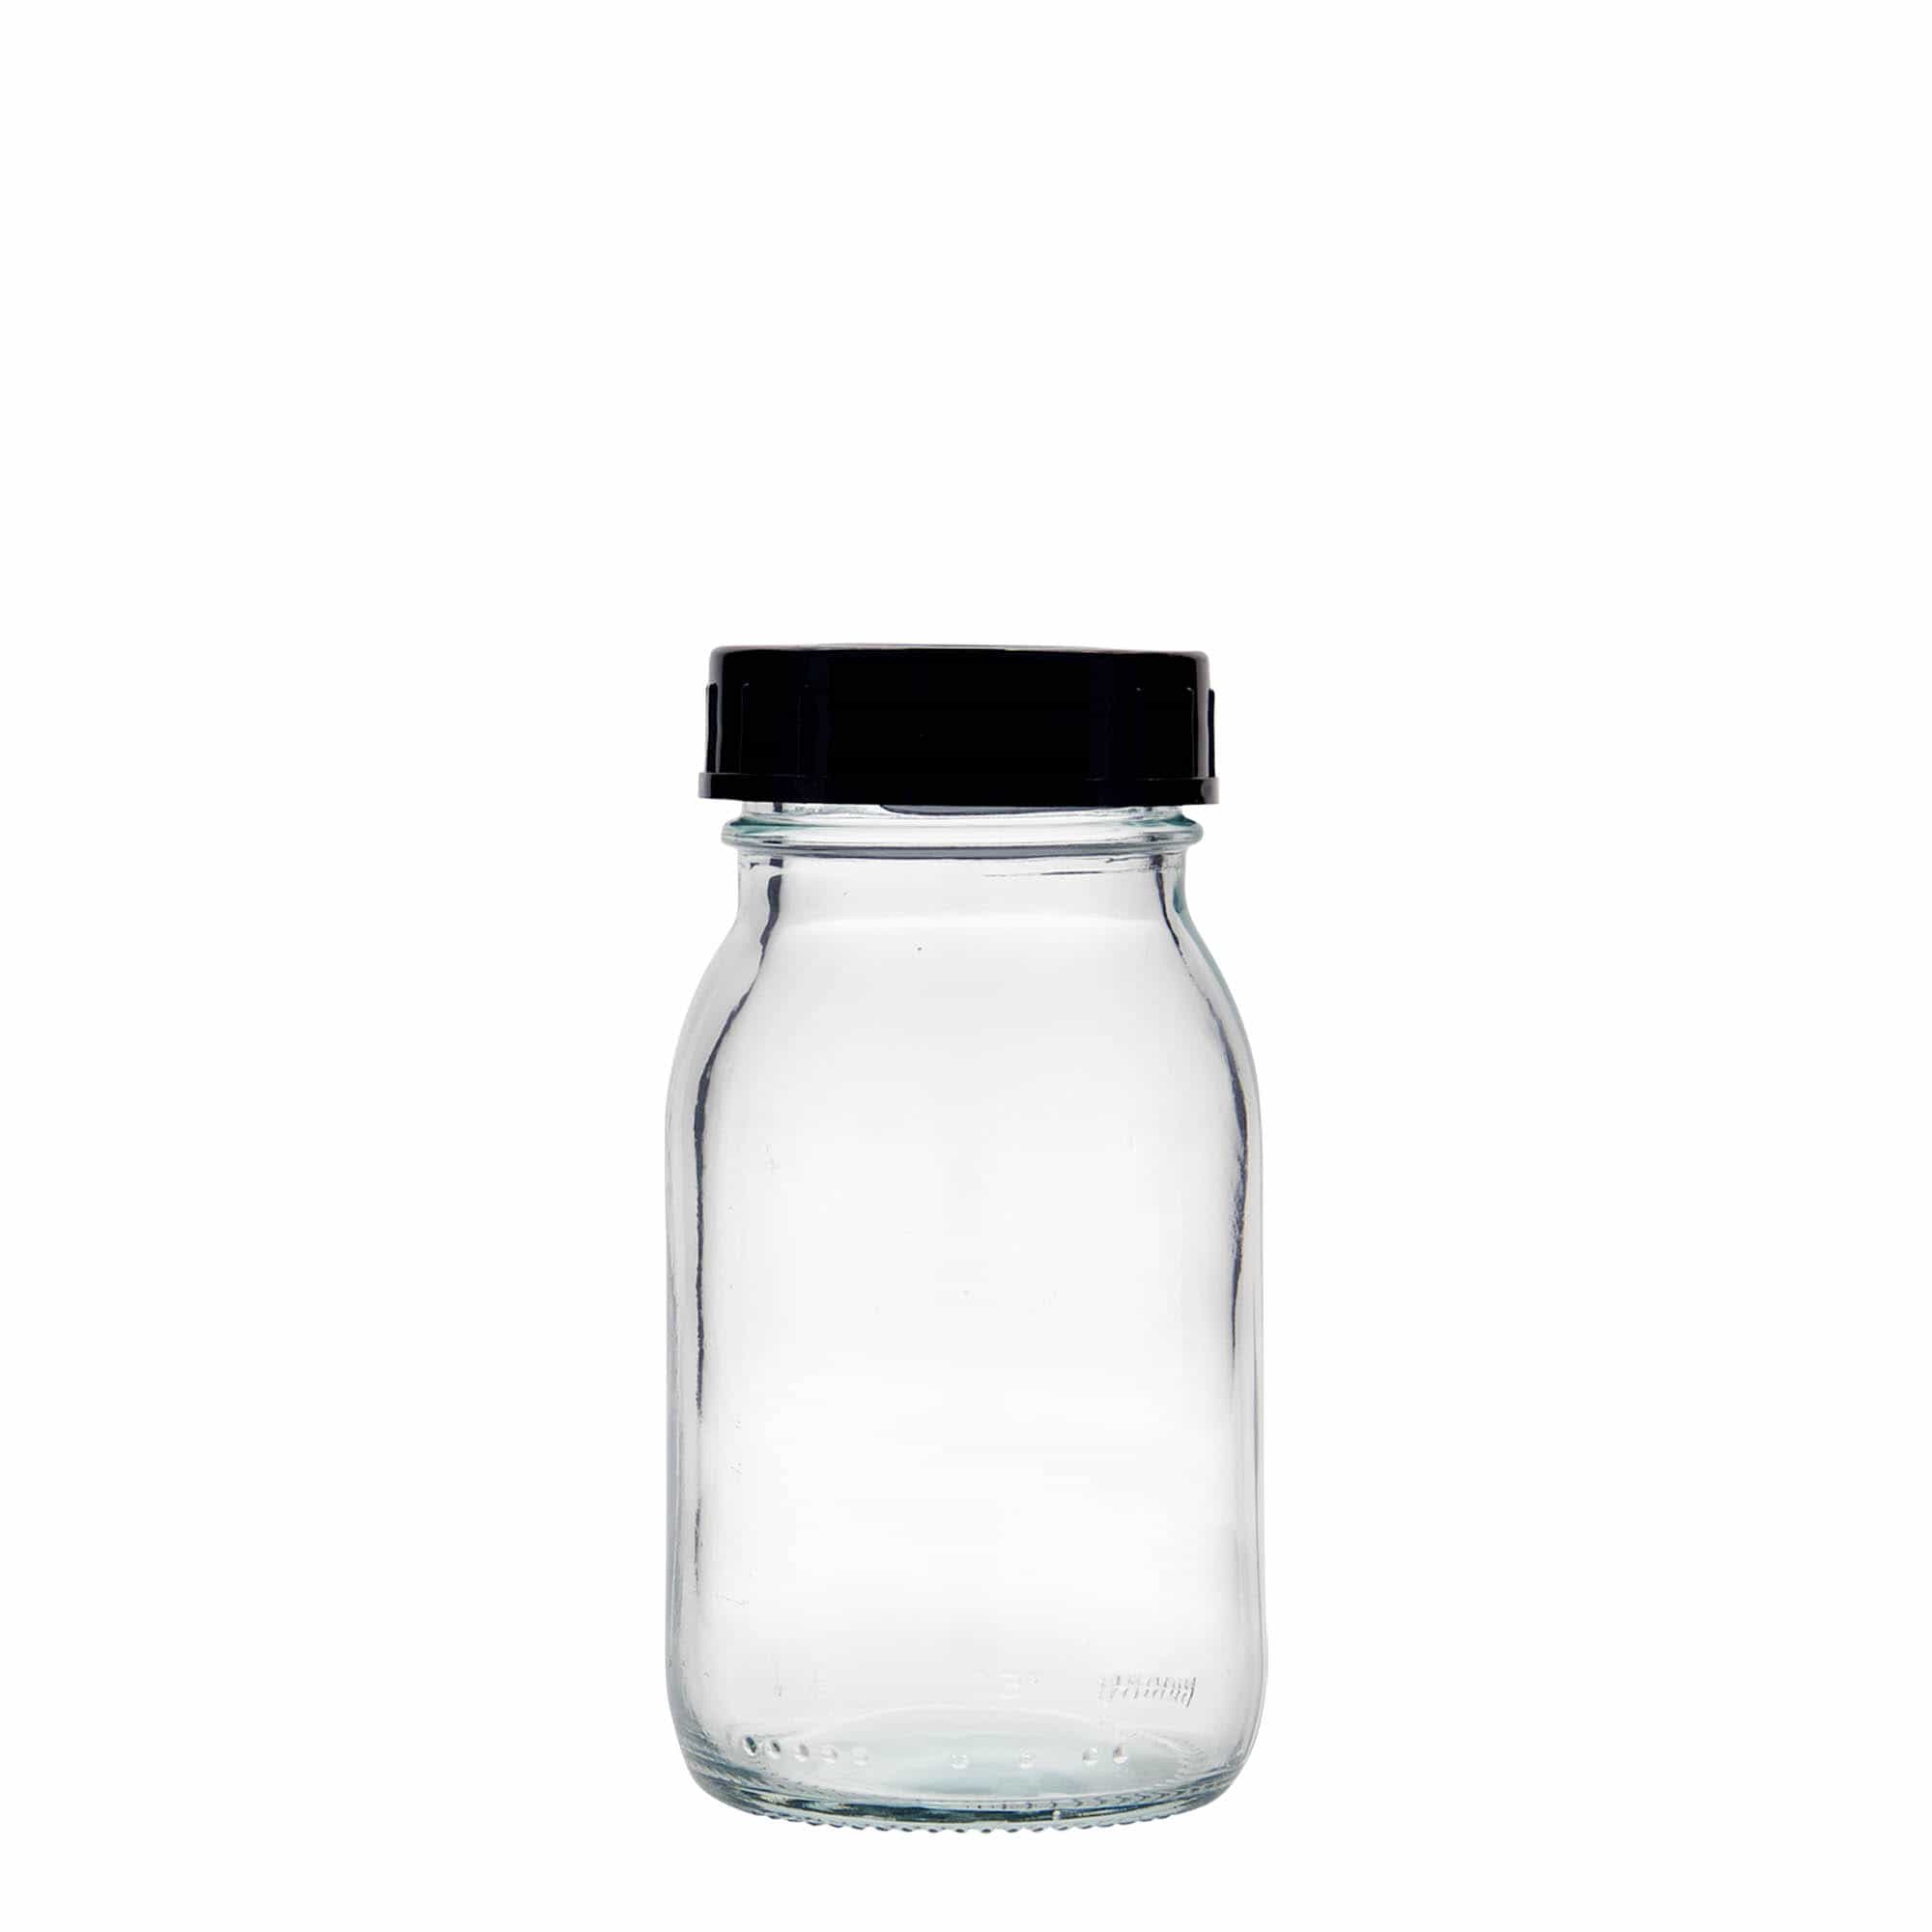 150 ml wide mouth jar, closure: DIN 45